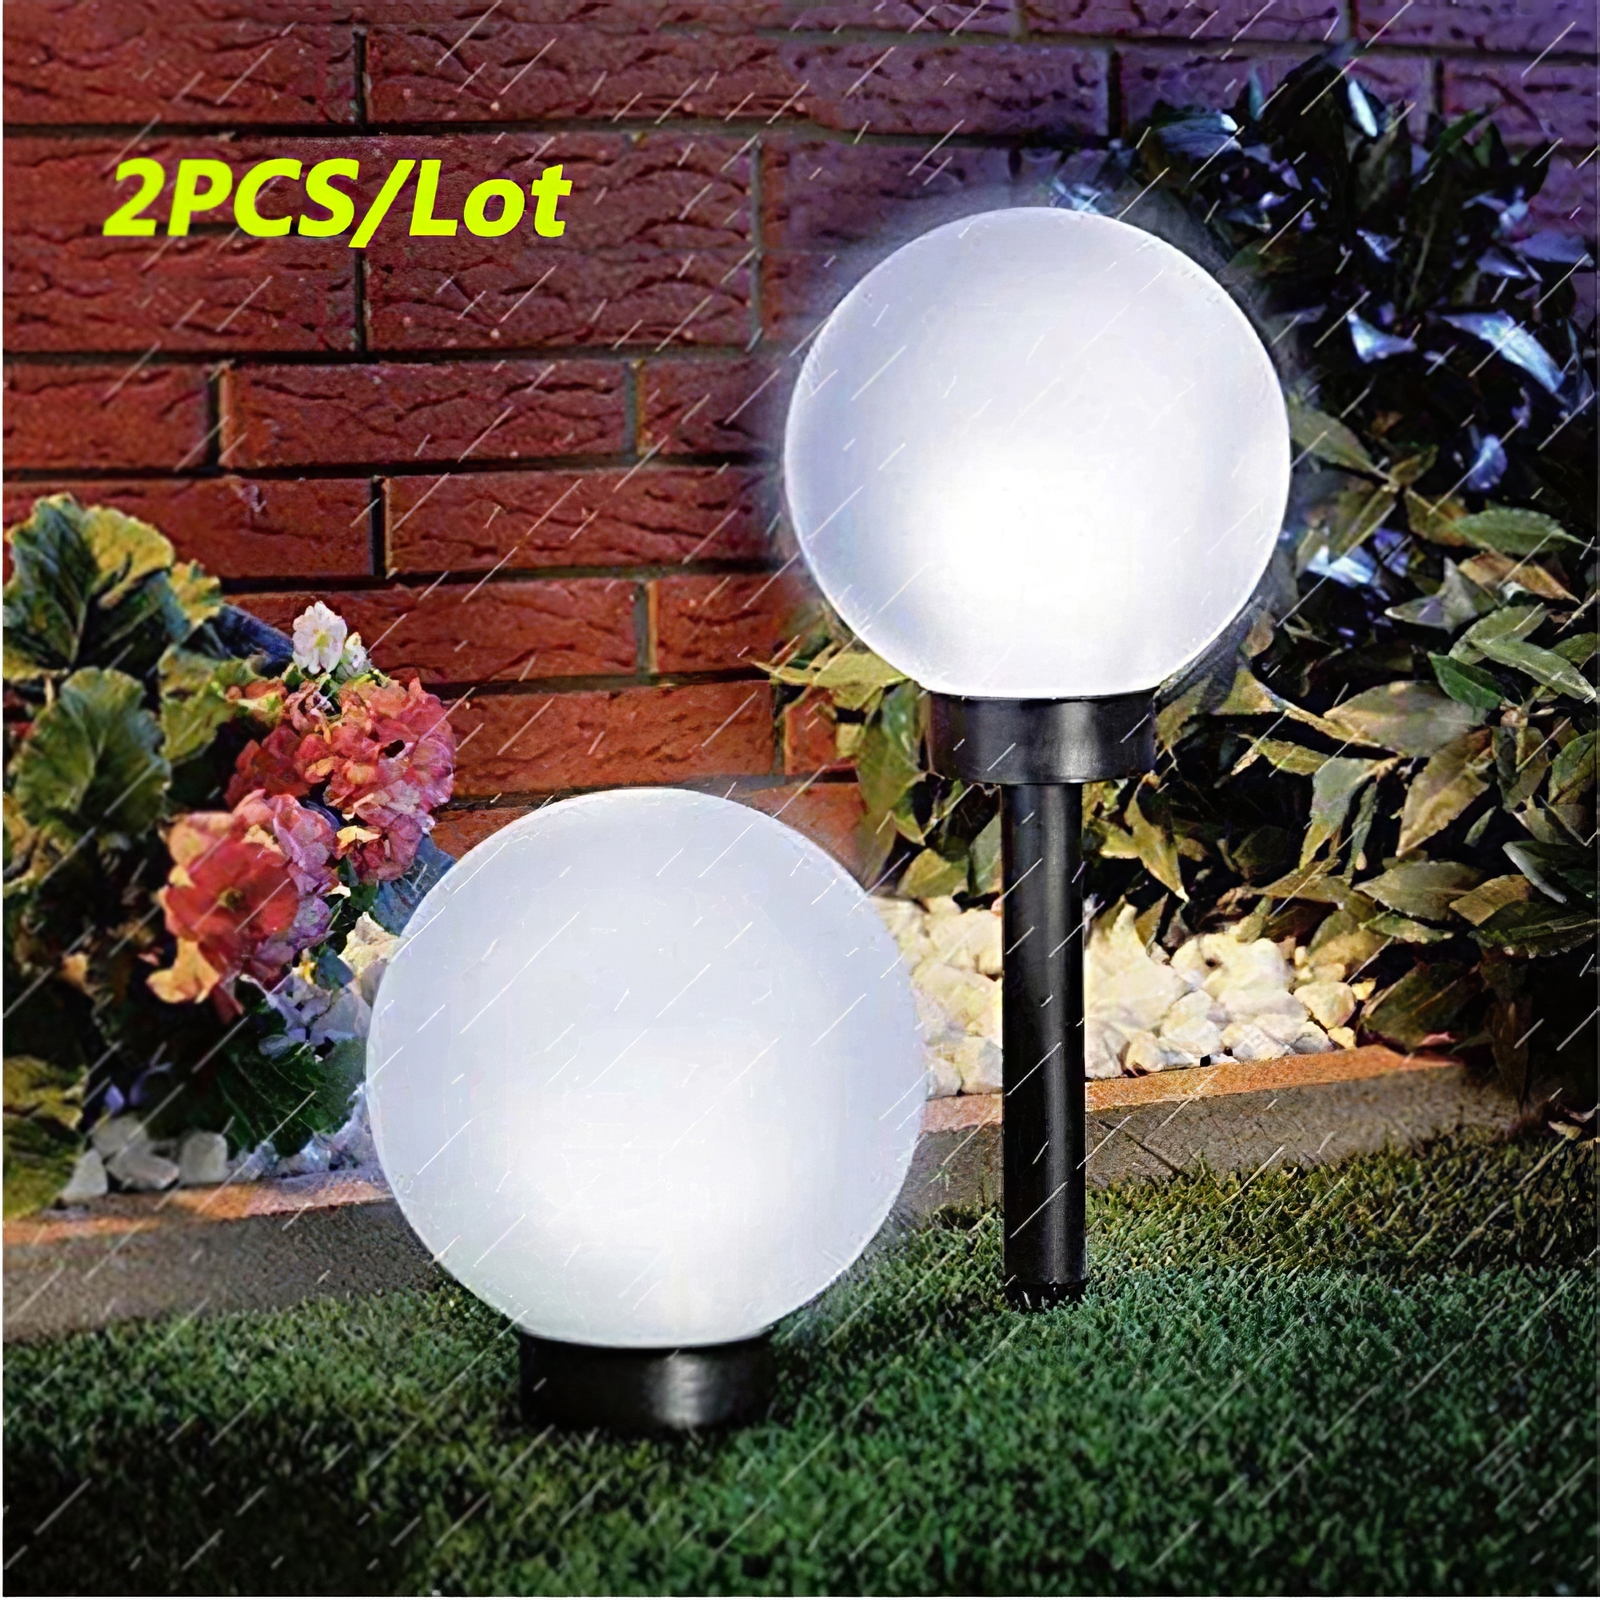 2Pcs/Lot LED Ball Lights, White Ball lights, Waterproof Lamp, Home decor lights - $23.99